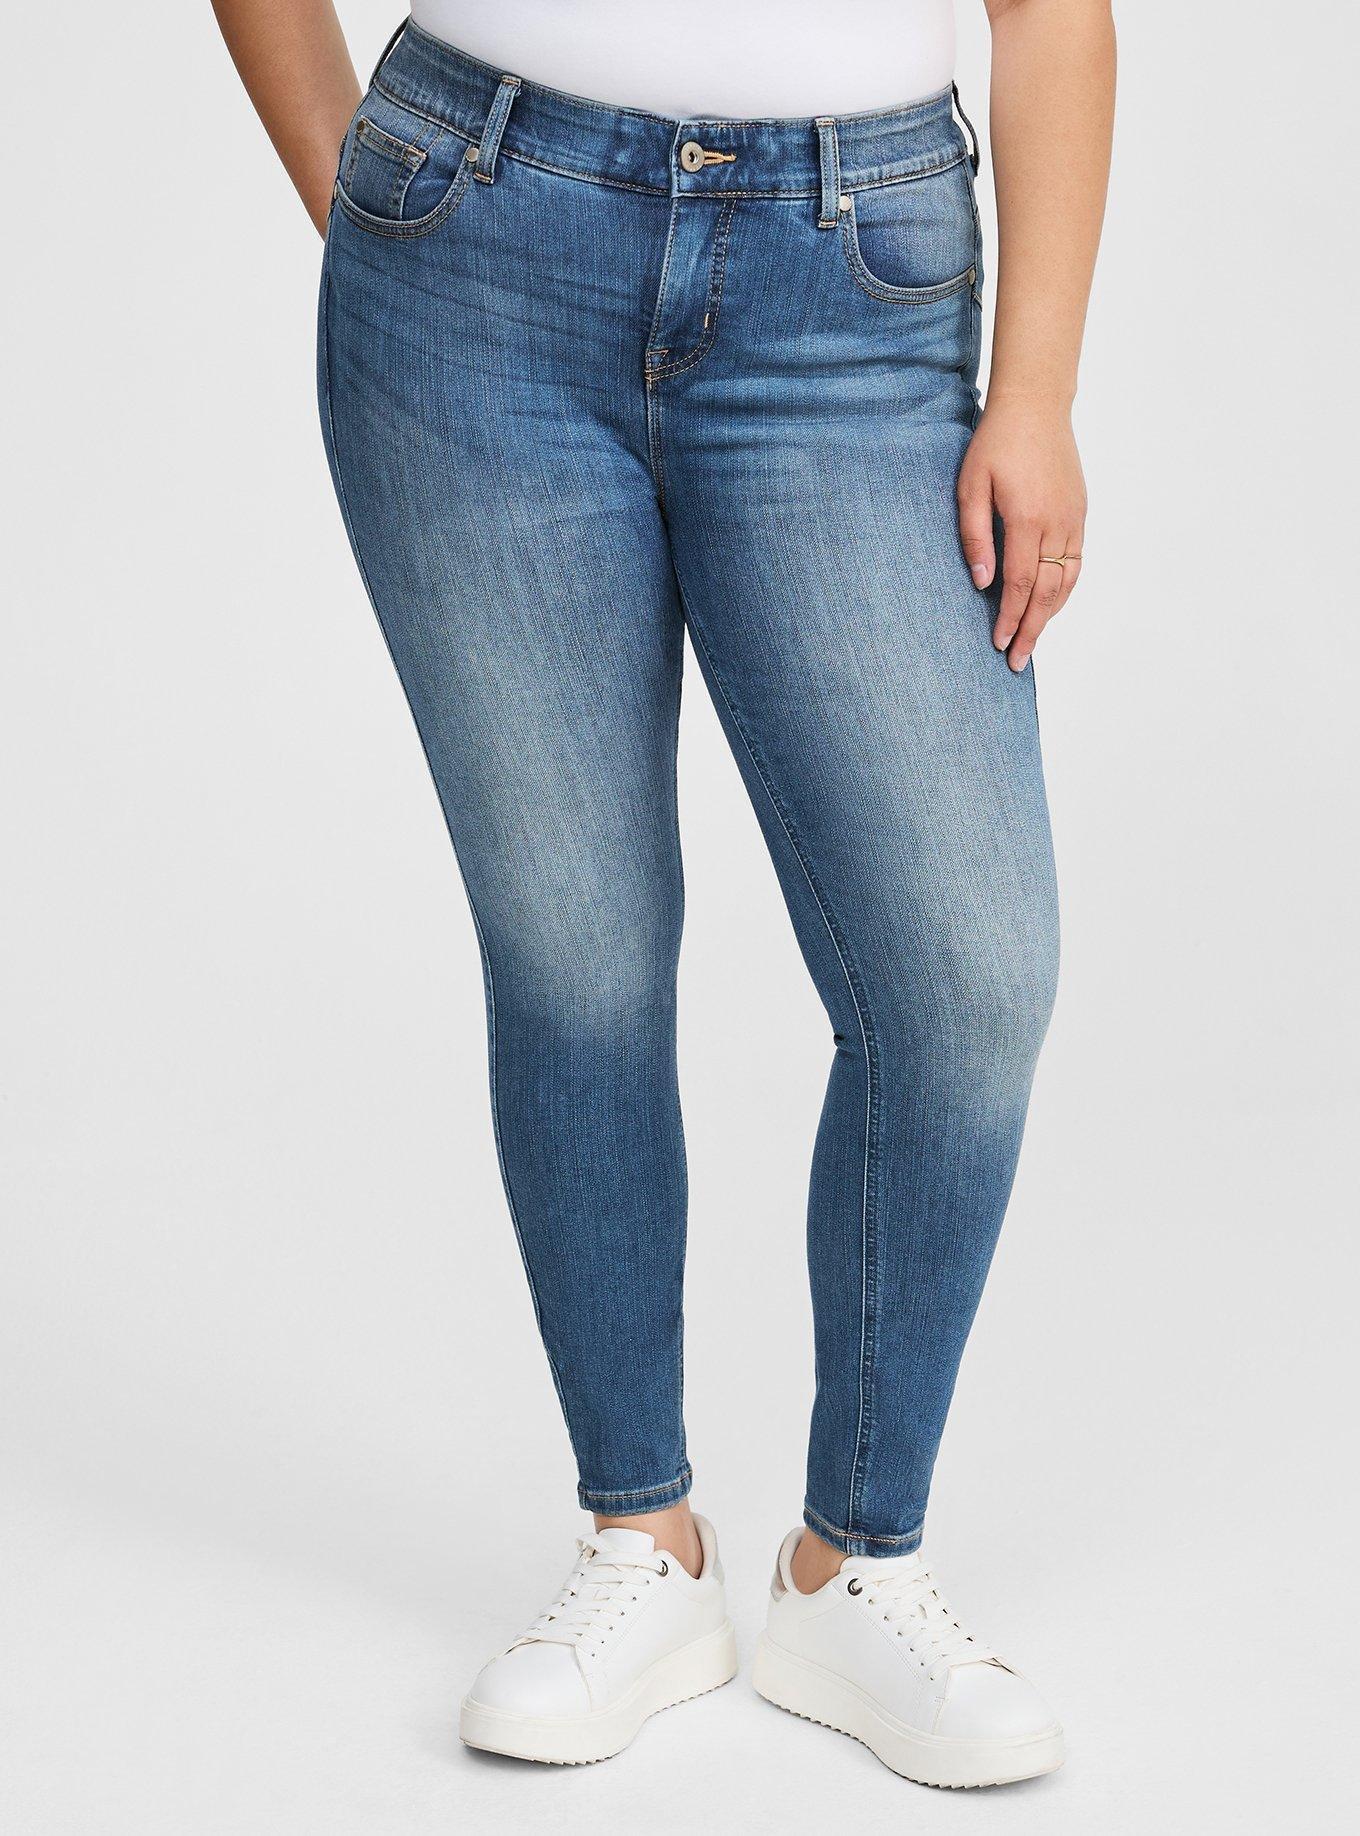 torrid, Jeans, Torrid Jeans Womens We Swear By The Fit Tummy Control  Jeggings Plus Size 6t